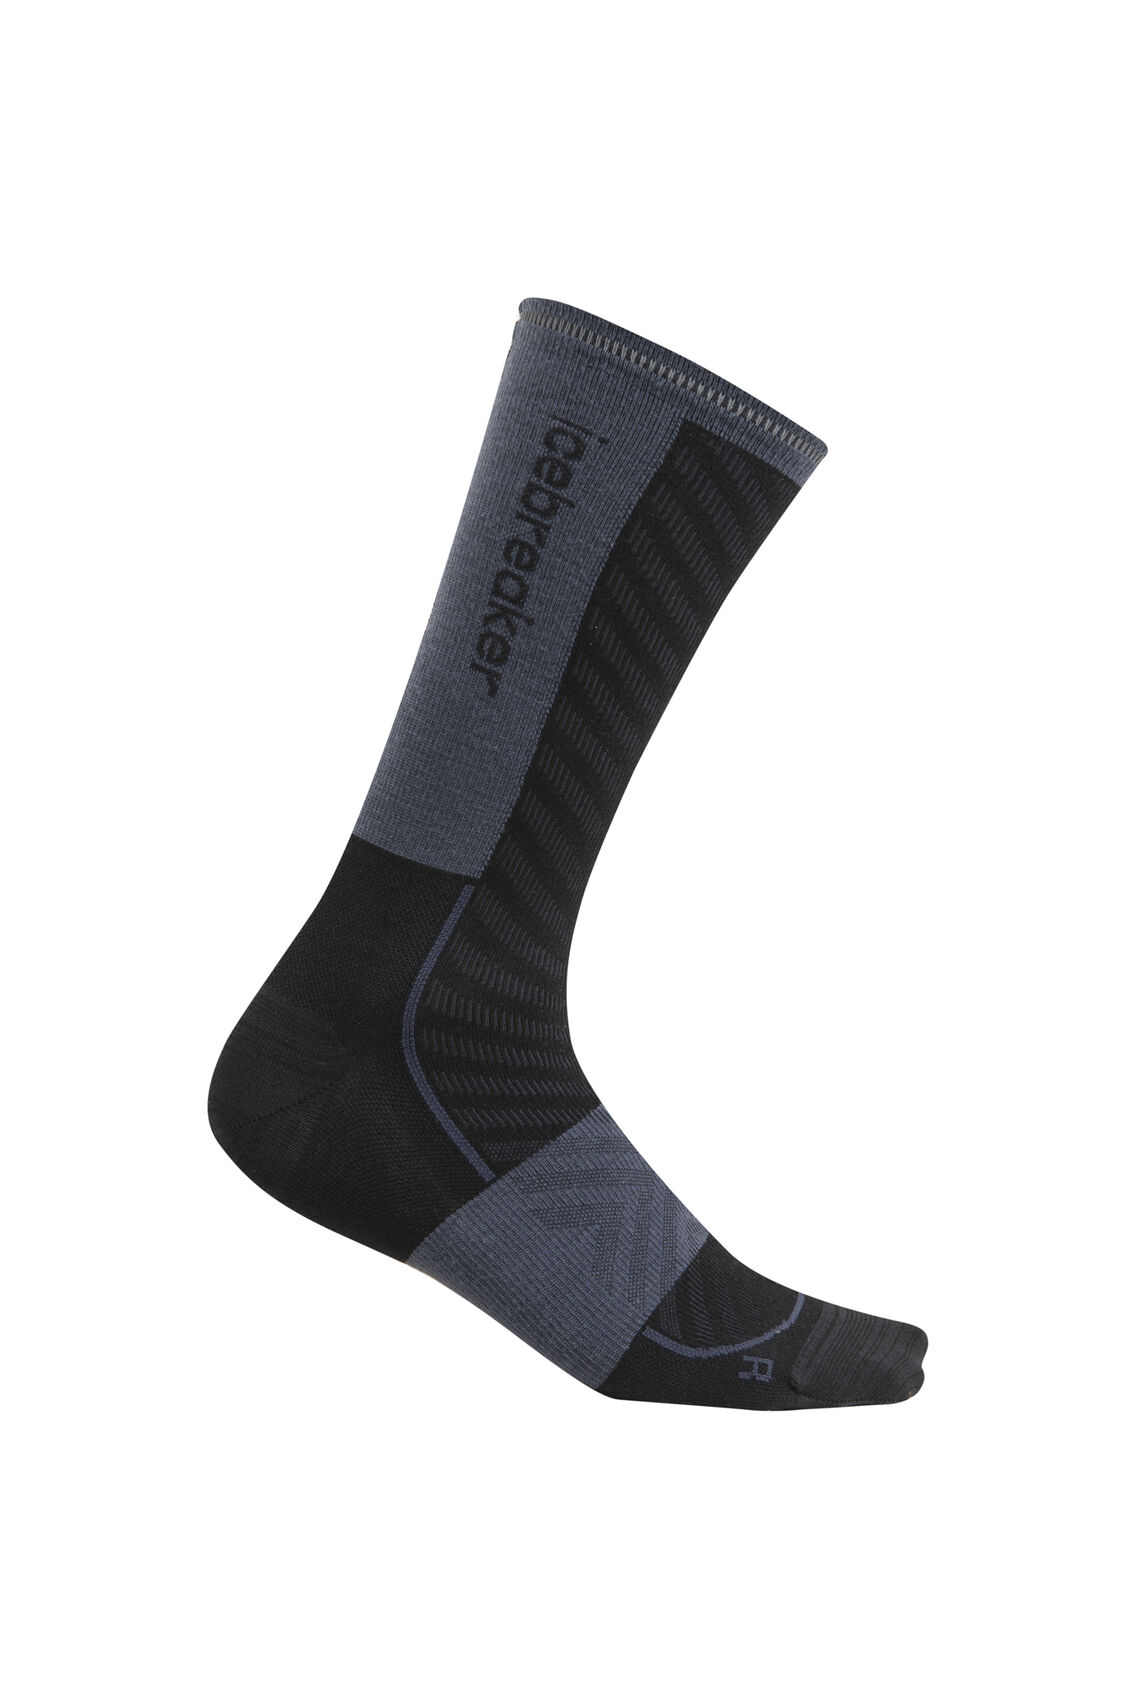 Icebreaker Merino Blend Run+ Ultralight Crew Socks (Men's) - Black/Graphite - Find Your Feet Australia Hobart Launceston Tasmania 